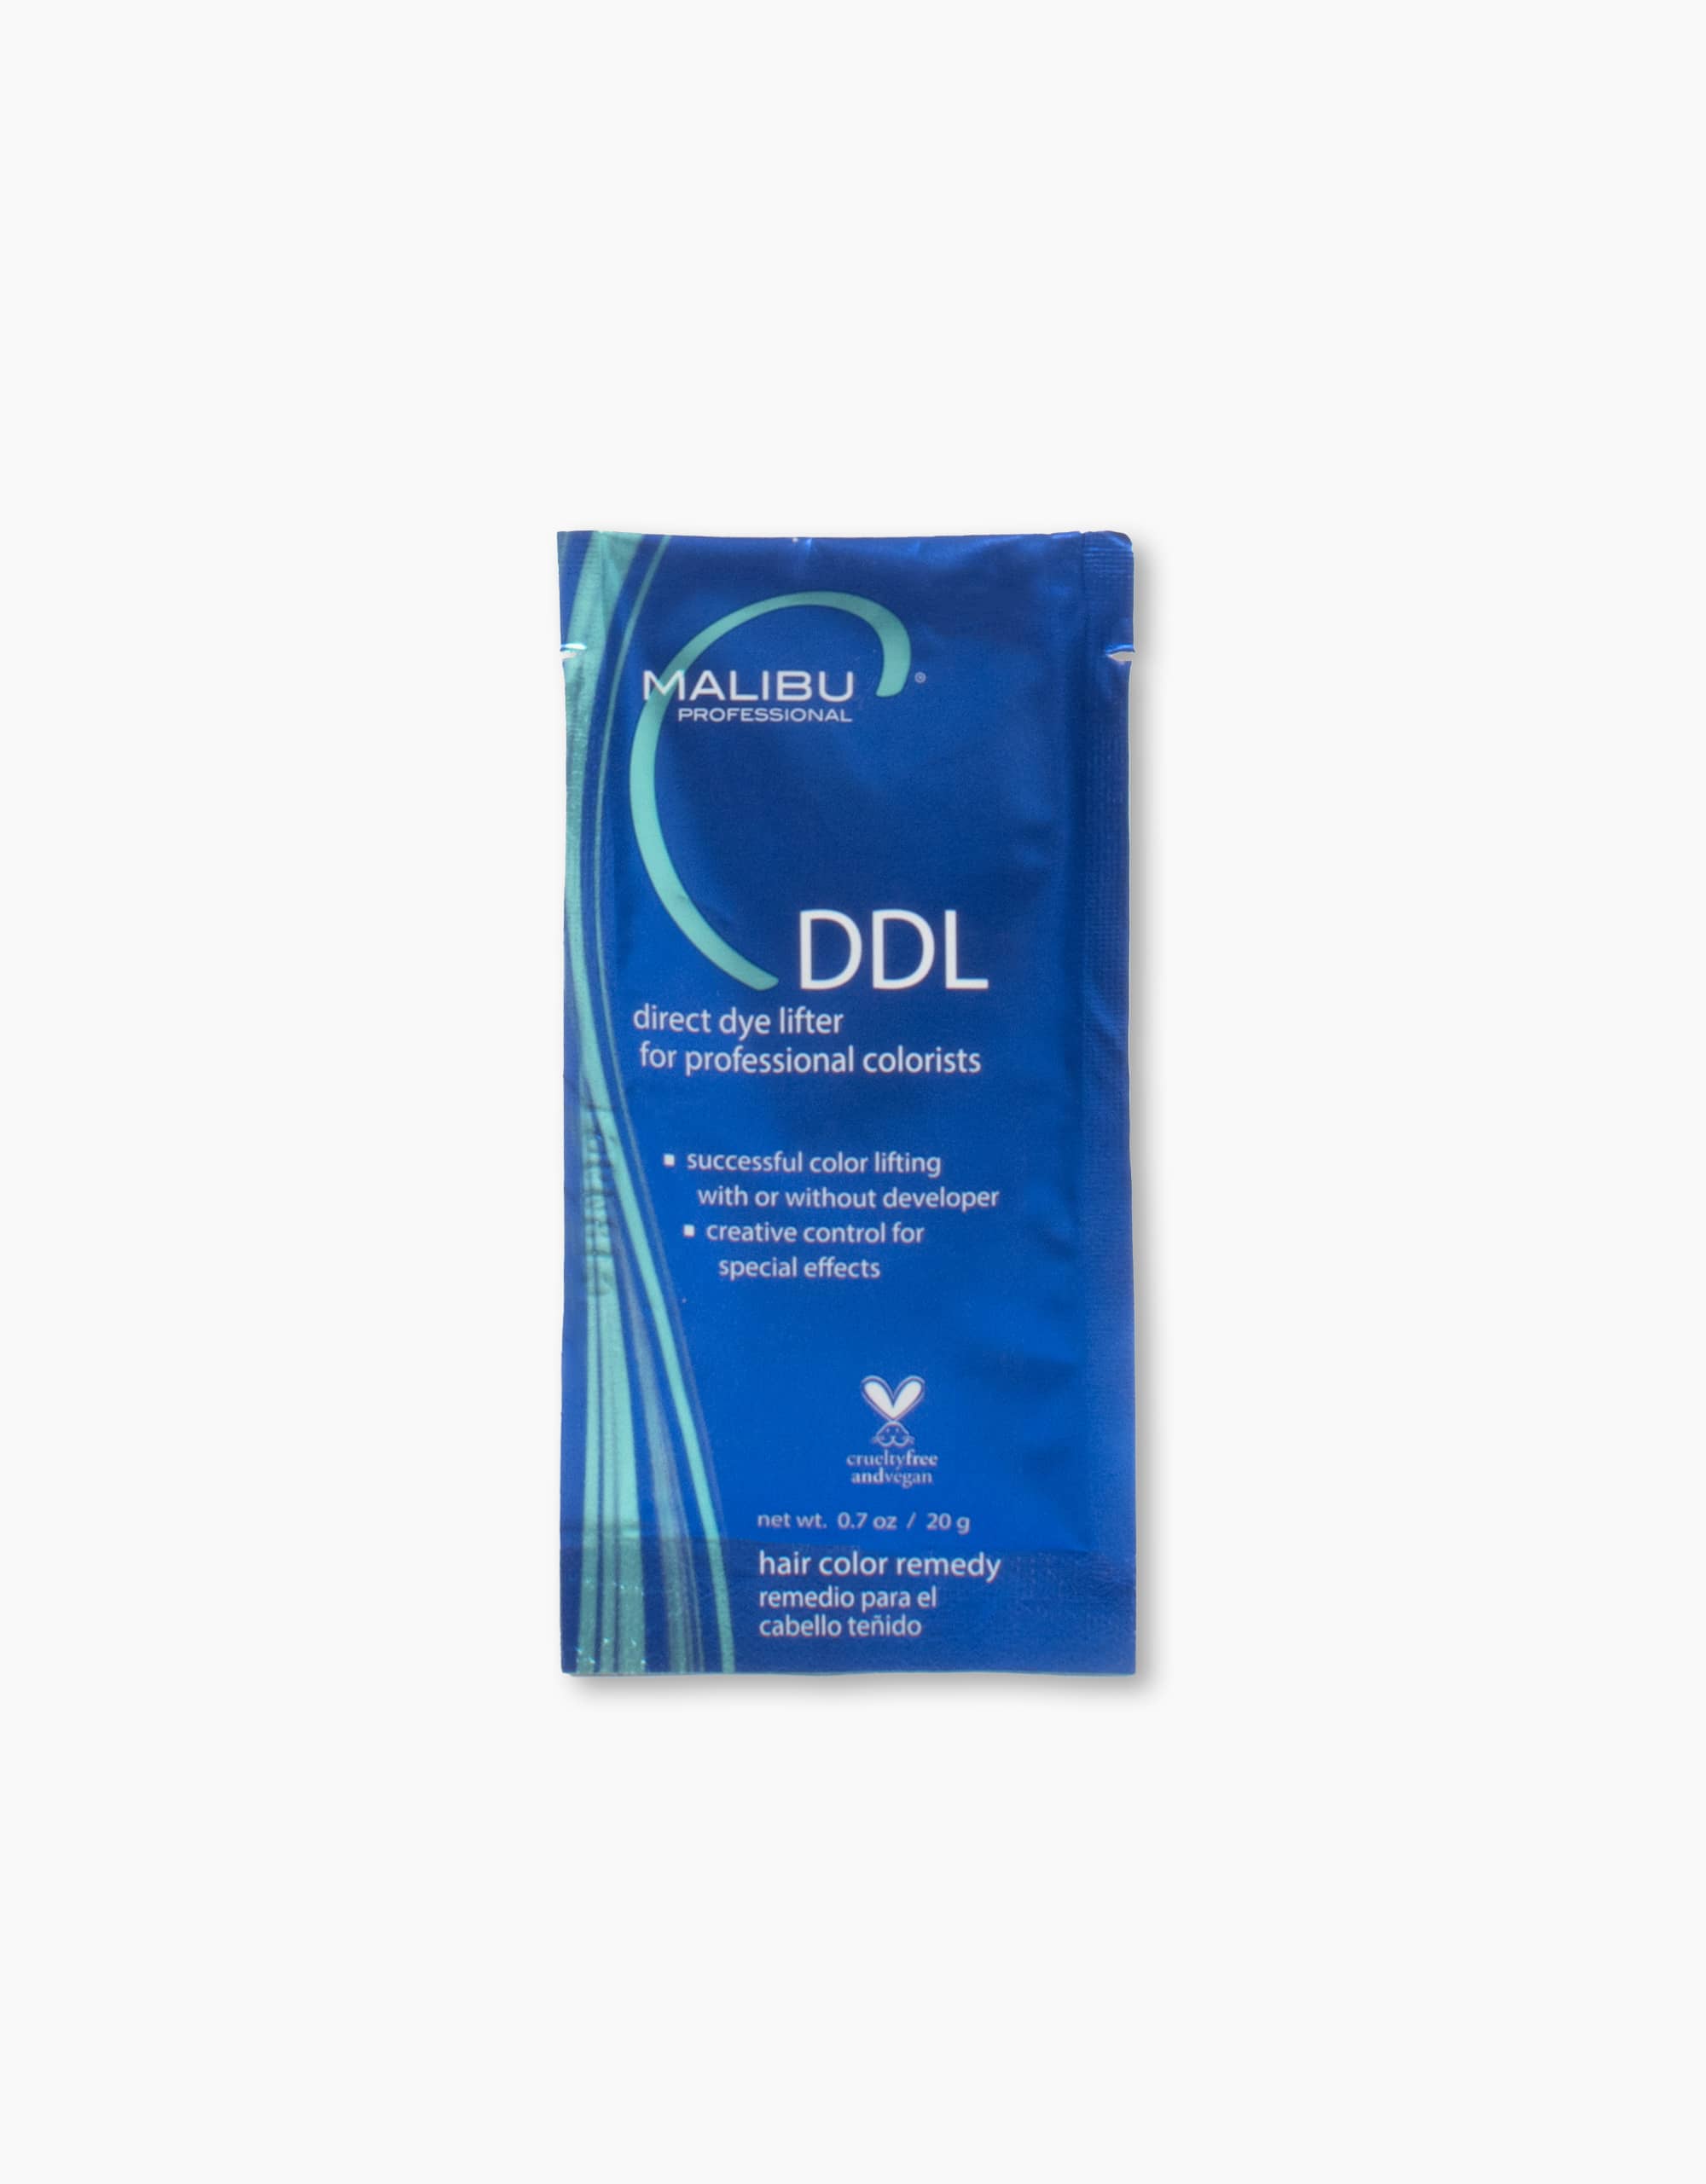 Malibu C DDL Direct Dye Lifter 20g